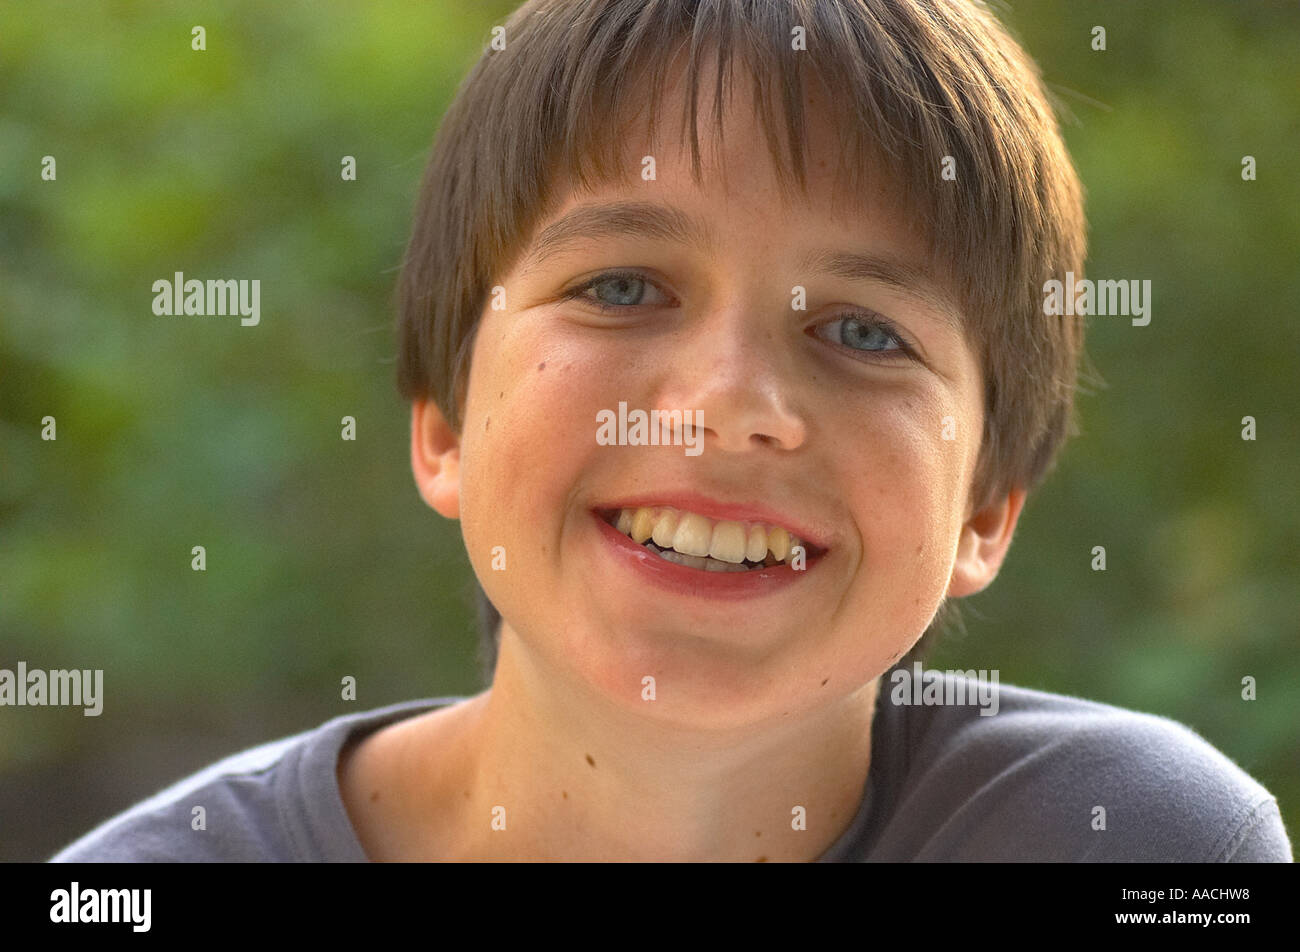 Laughing boy Stock Photo